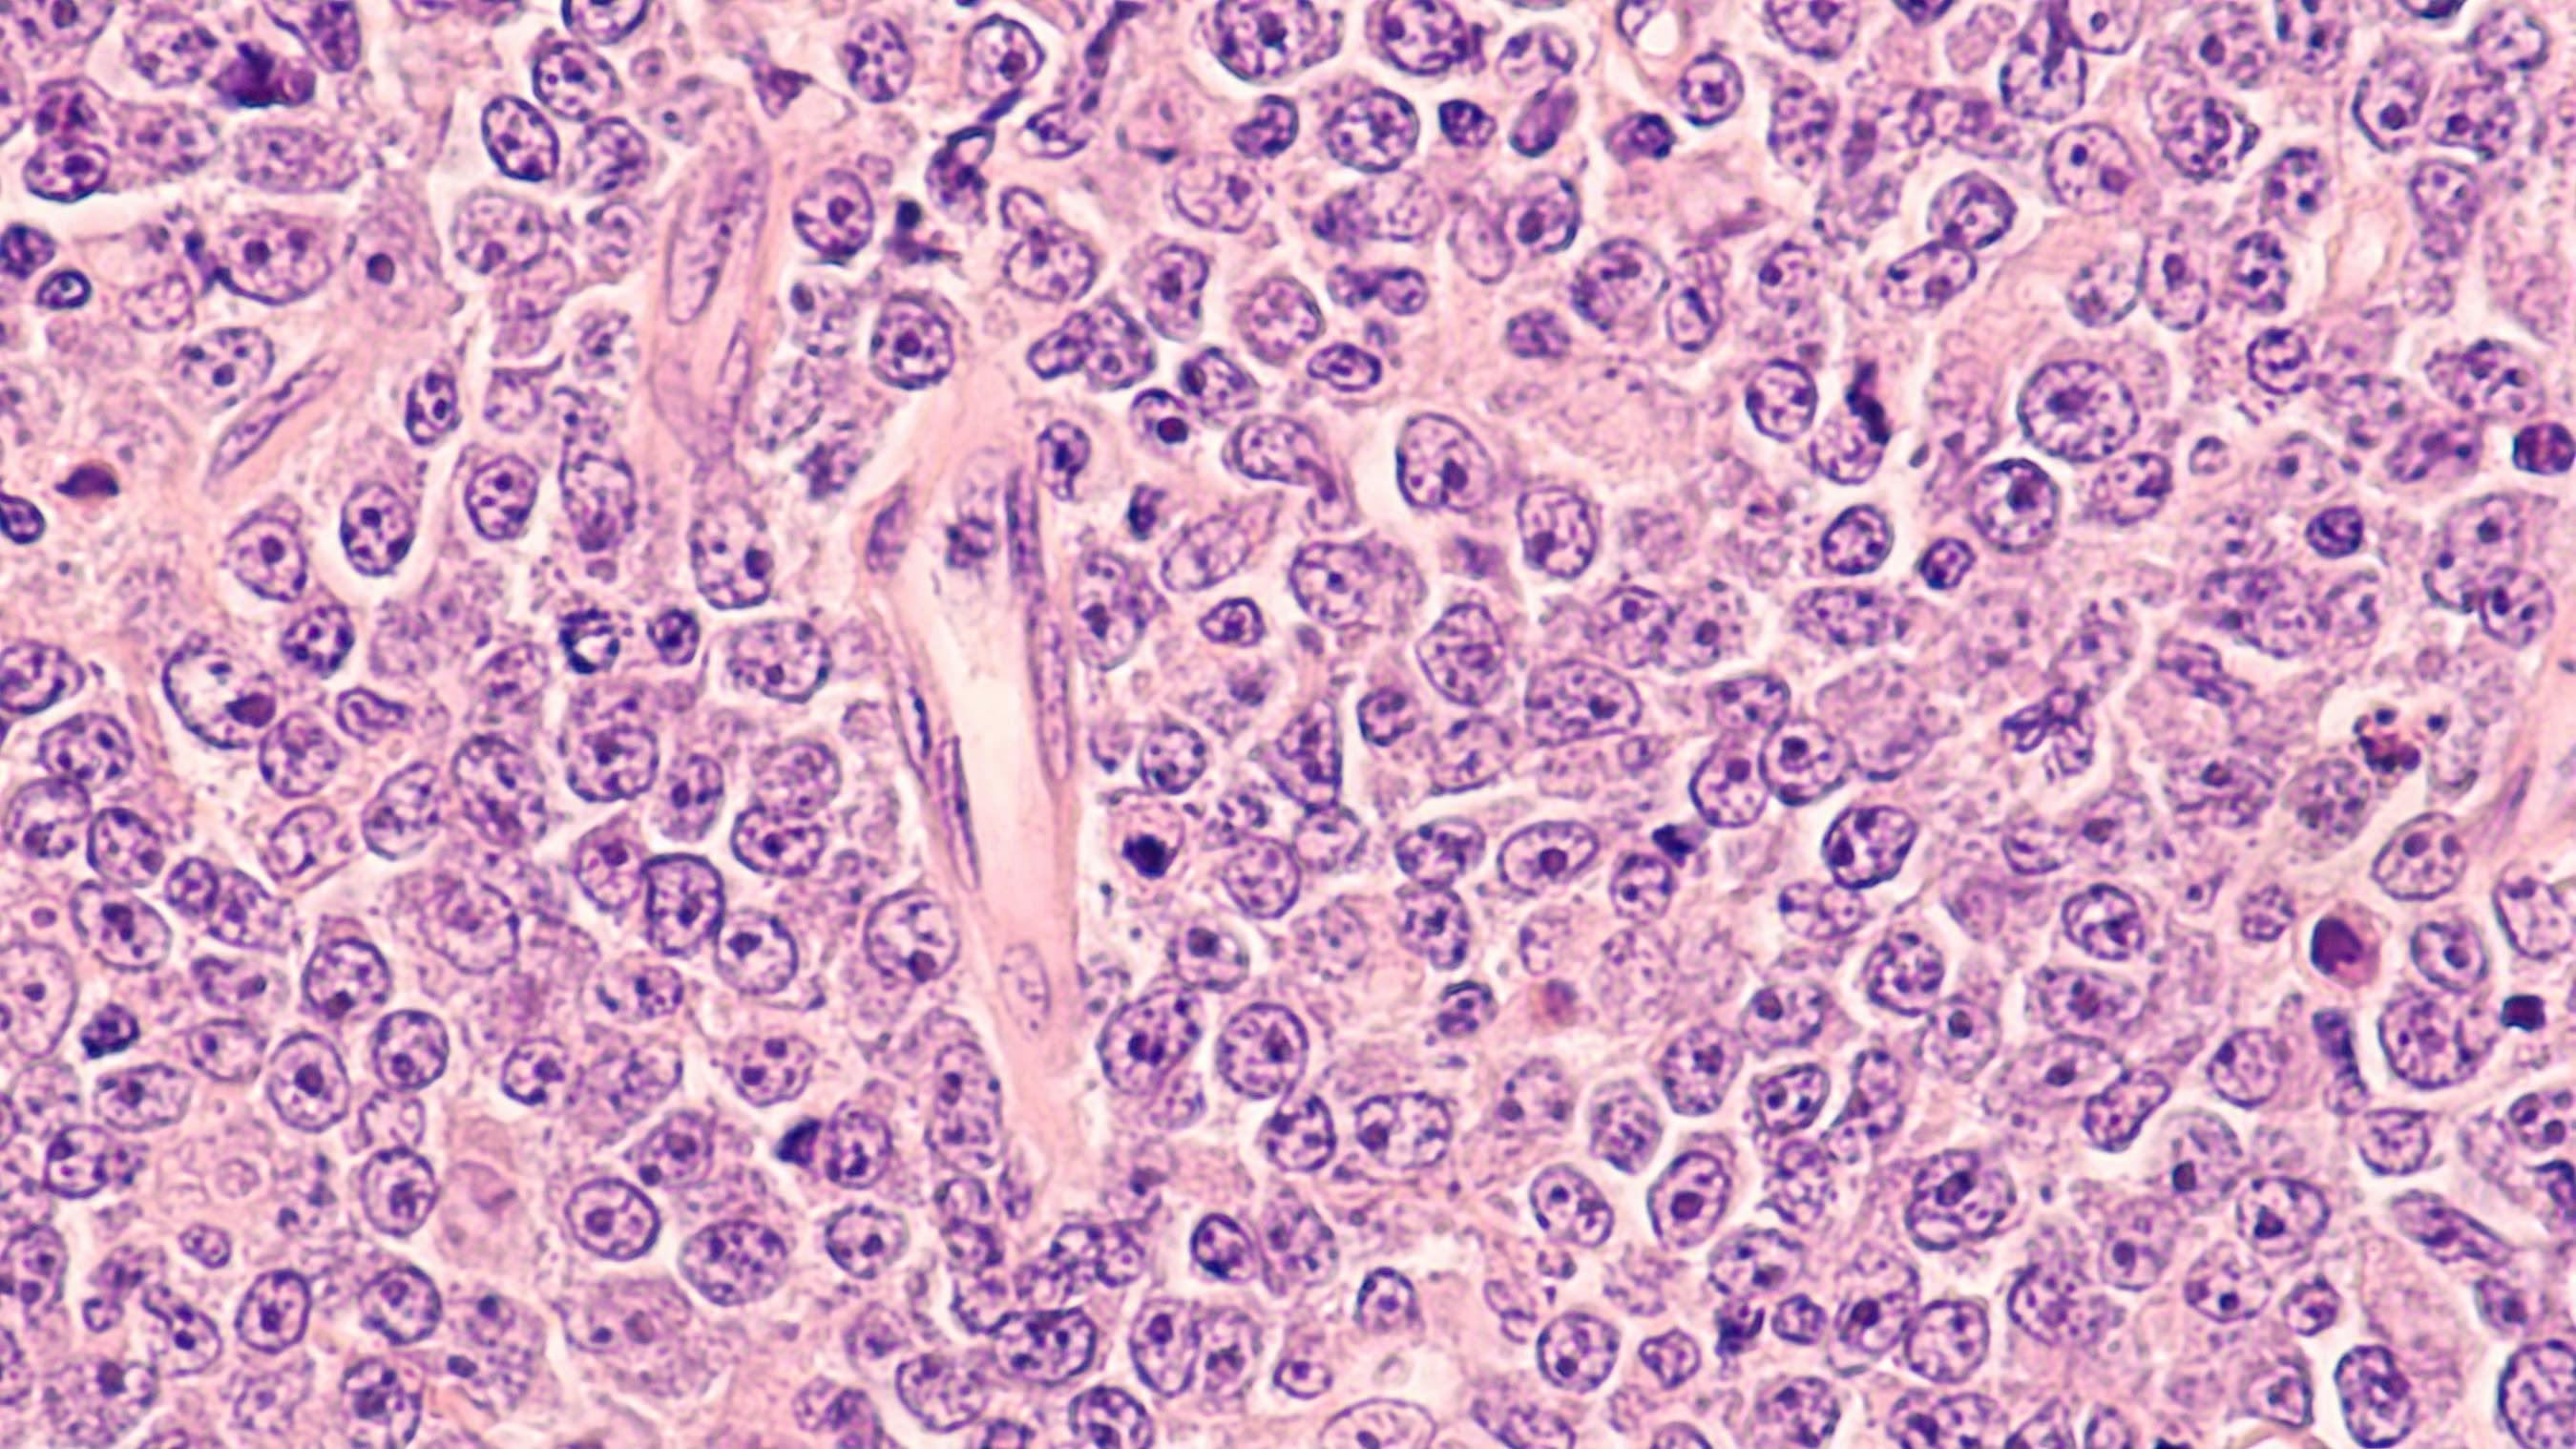 Diffuse large B-cell lymphoma - David A Litman - stock.adobe.com